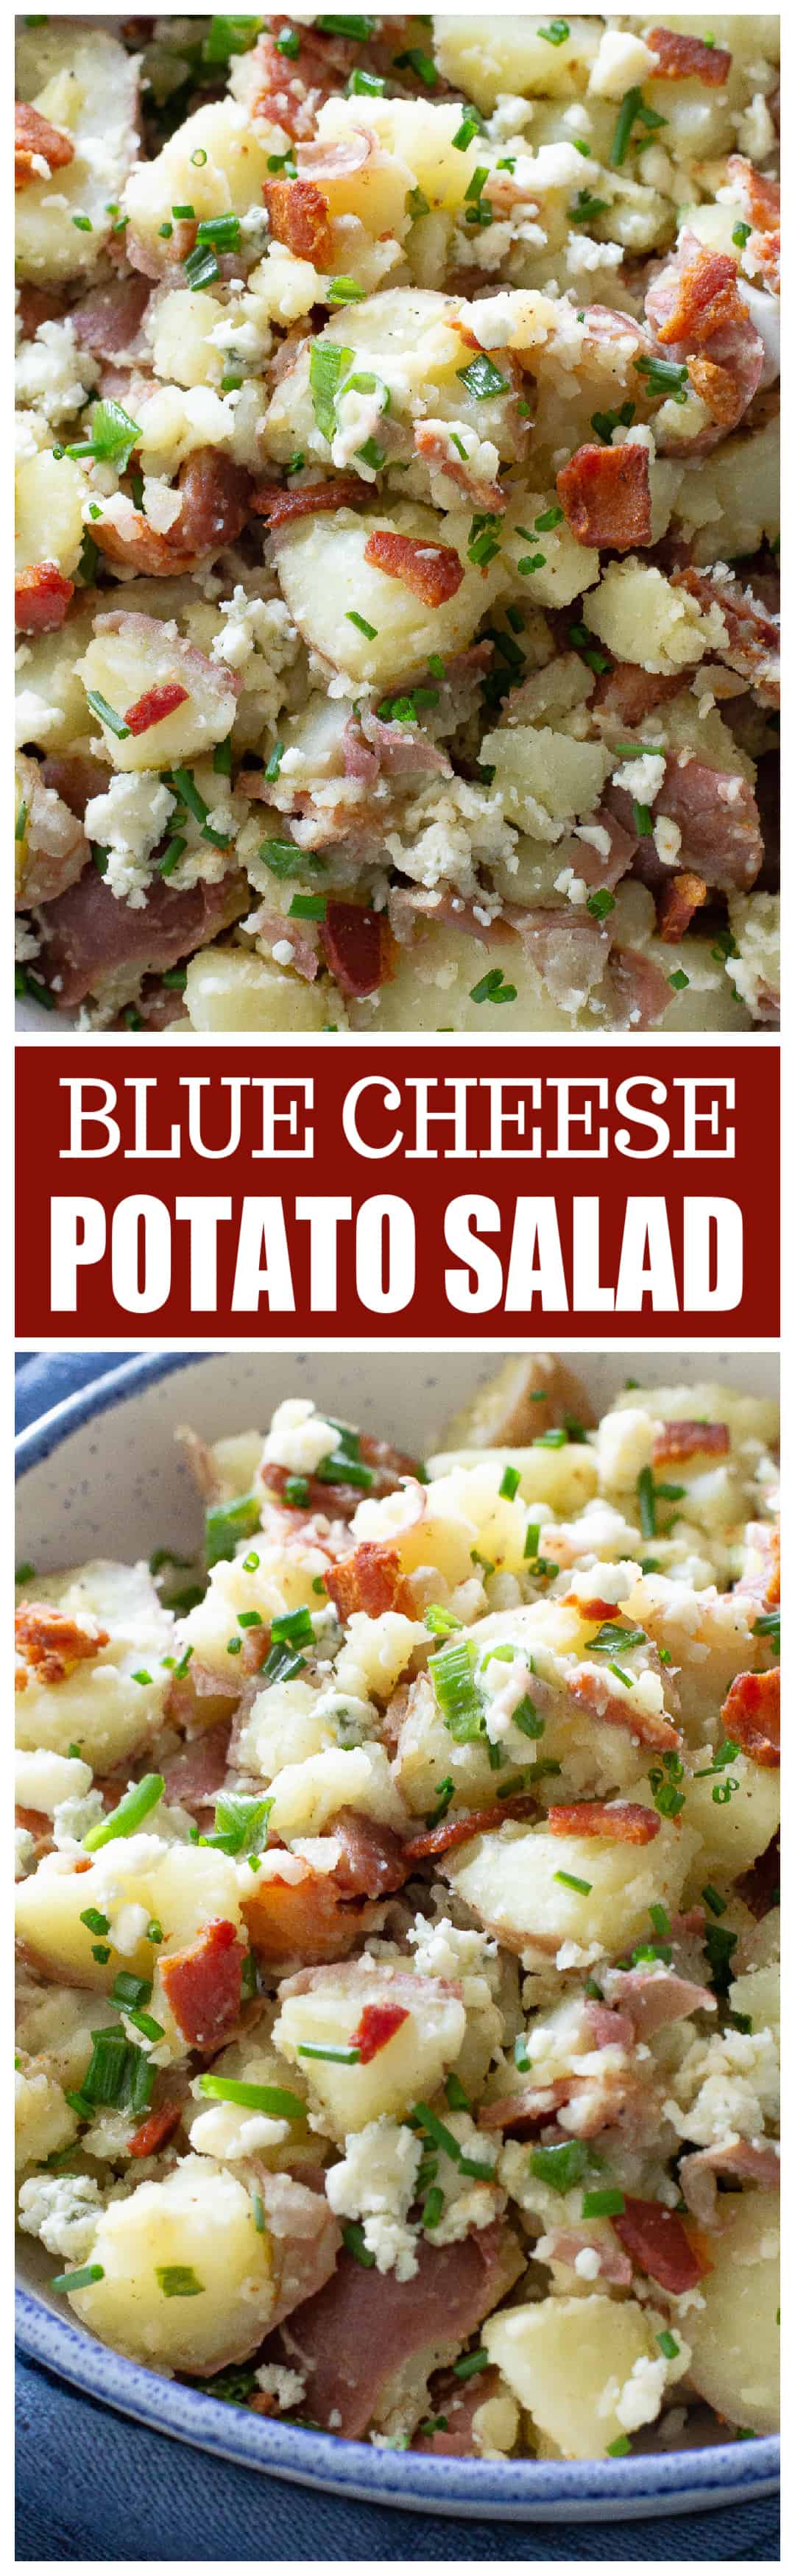 Blue cheese potato salad